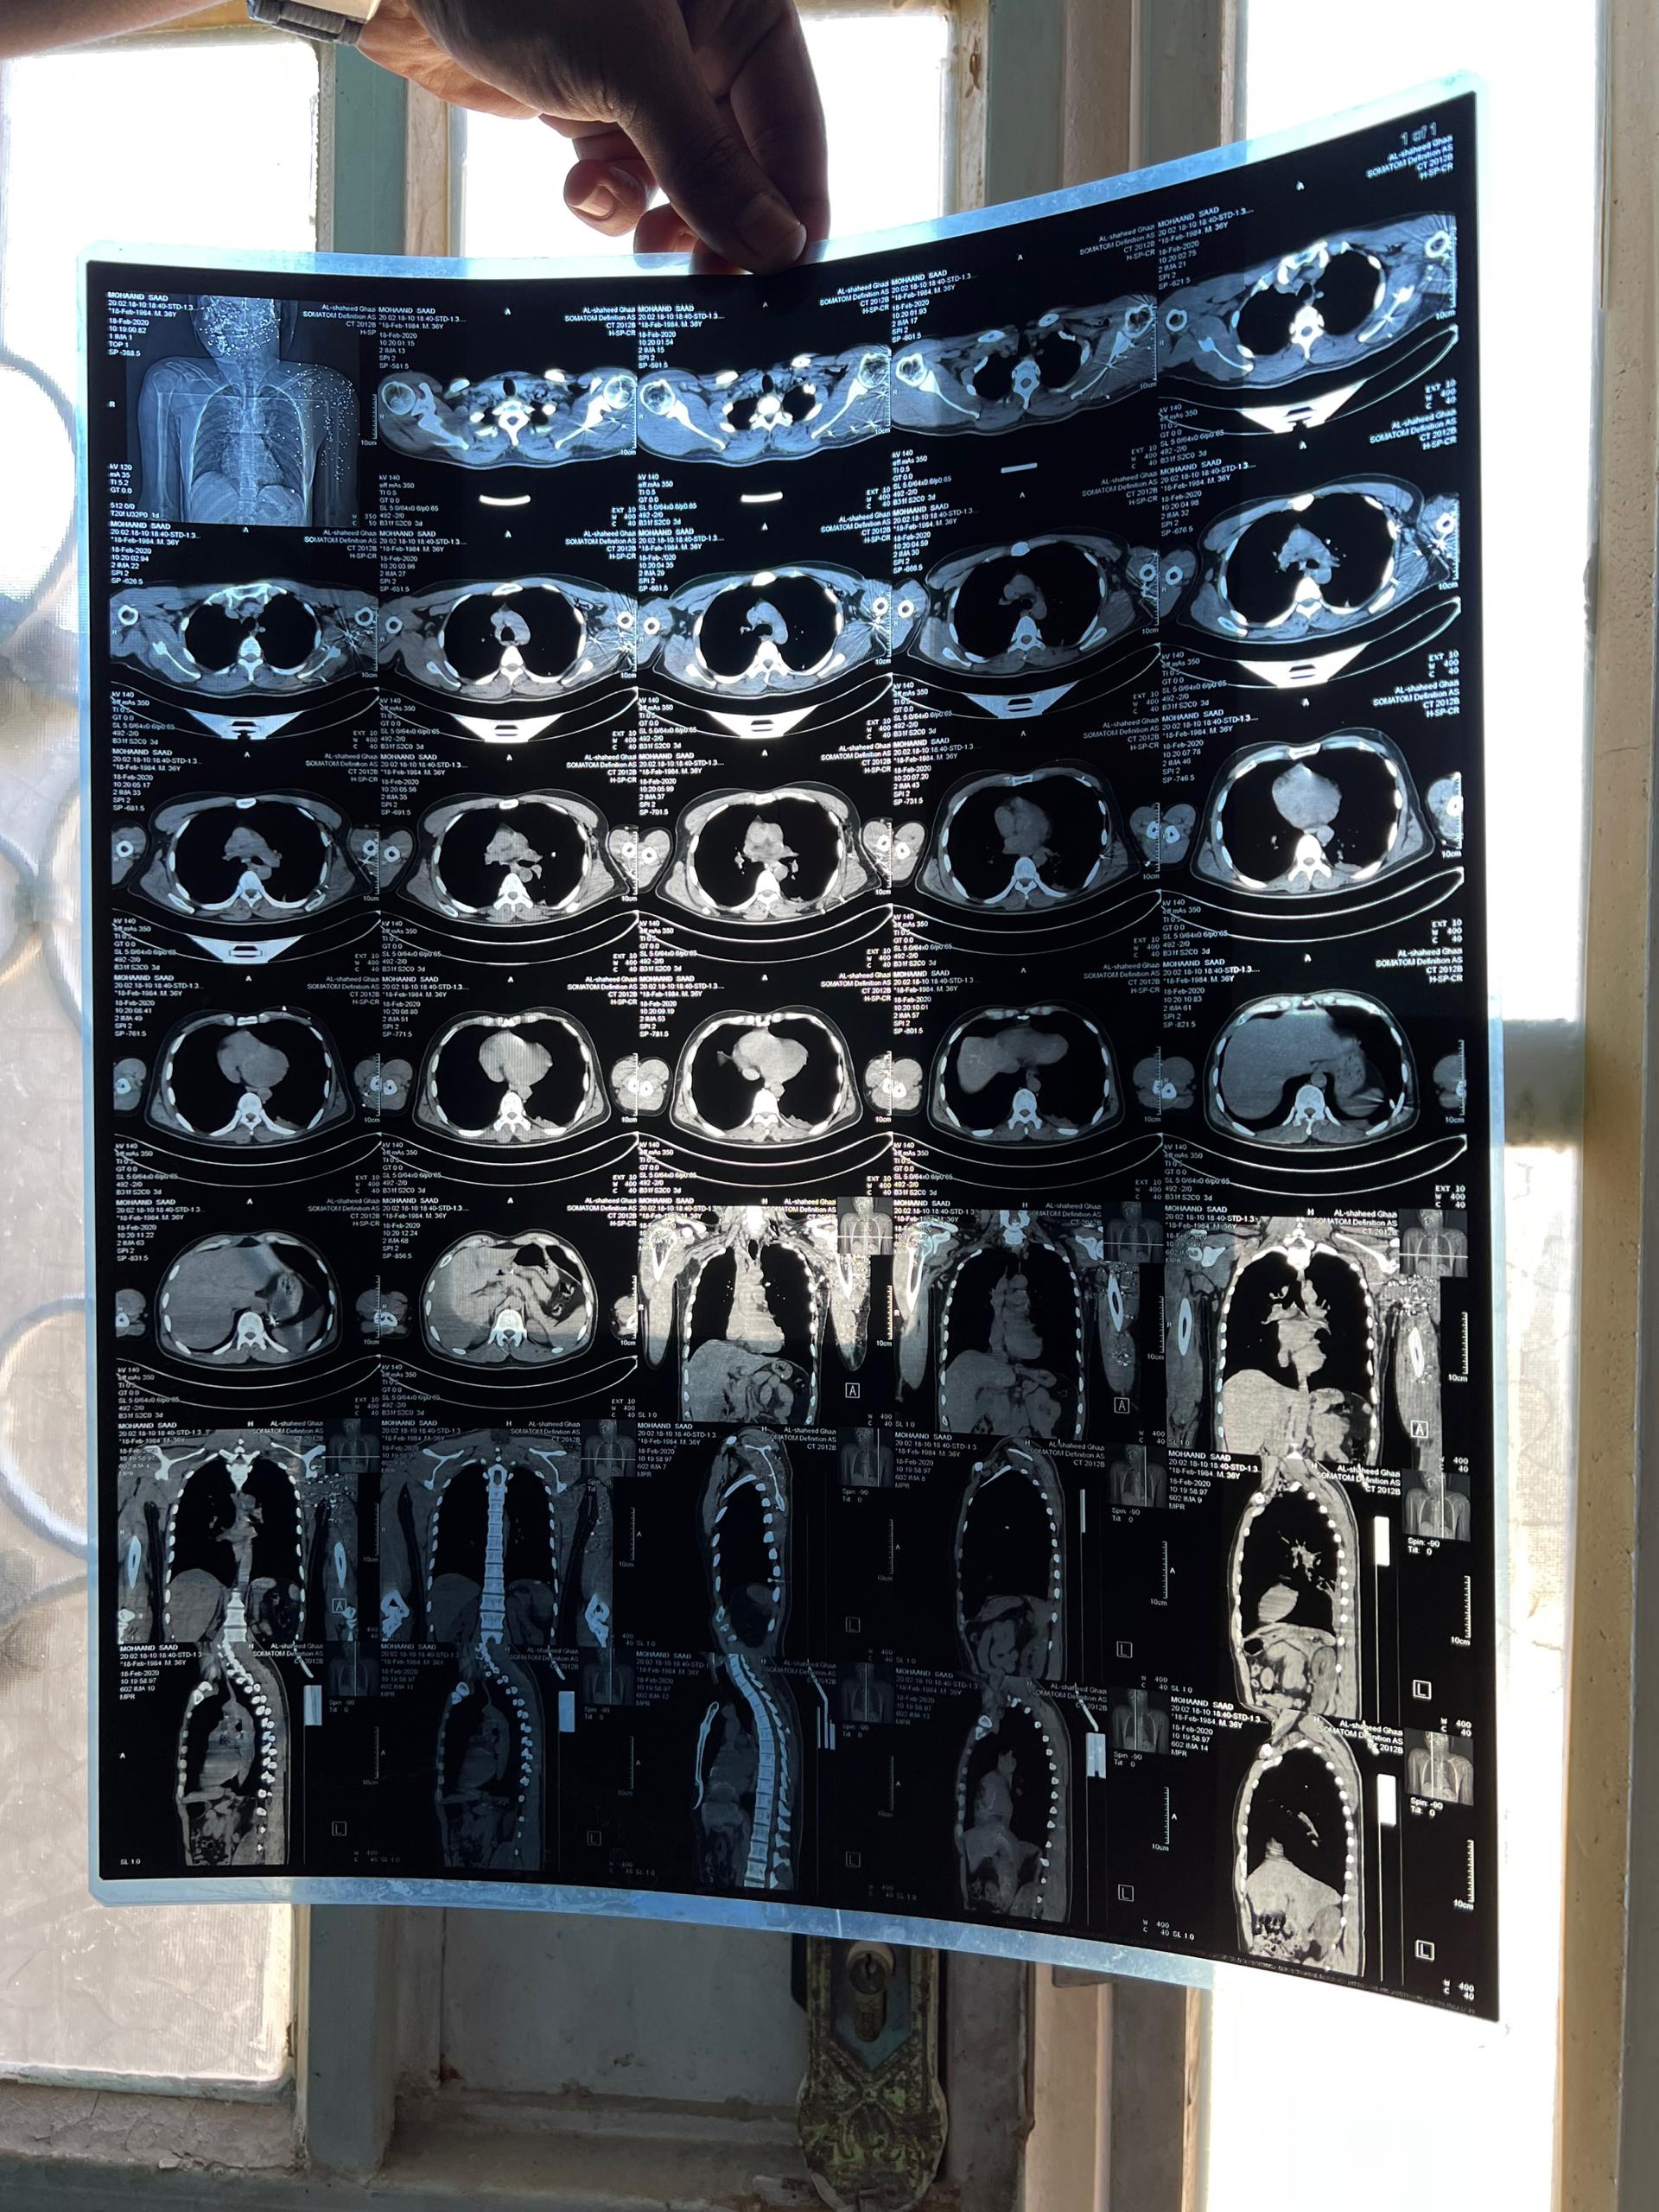 X-rays on display